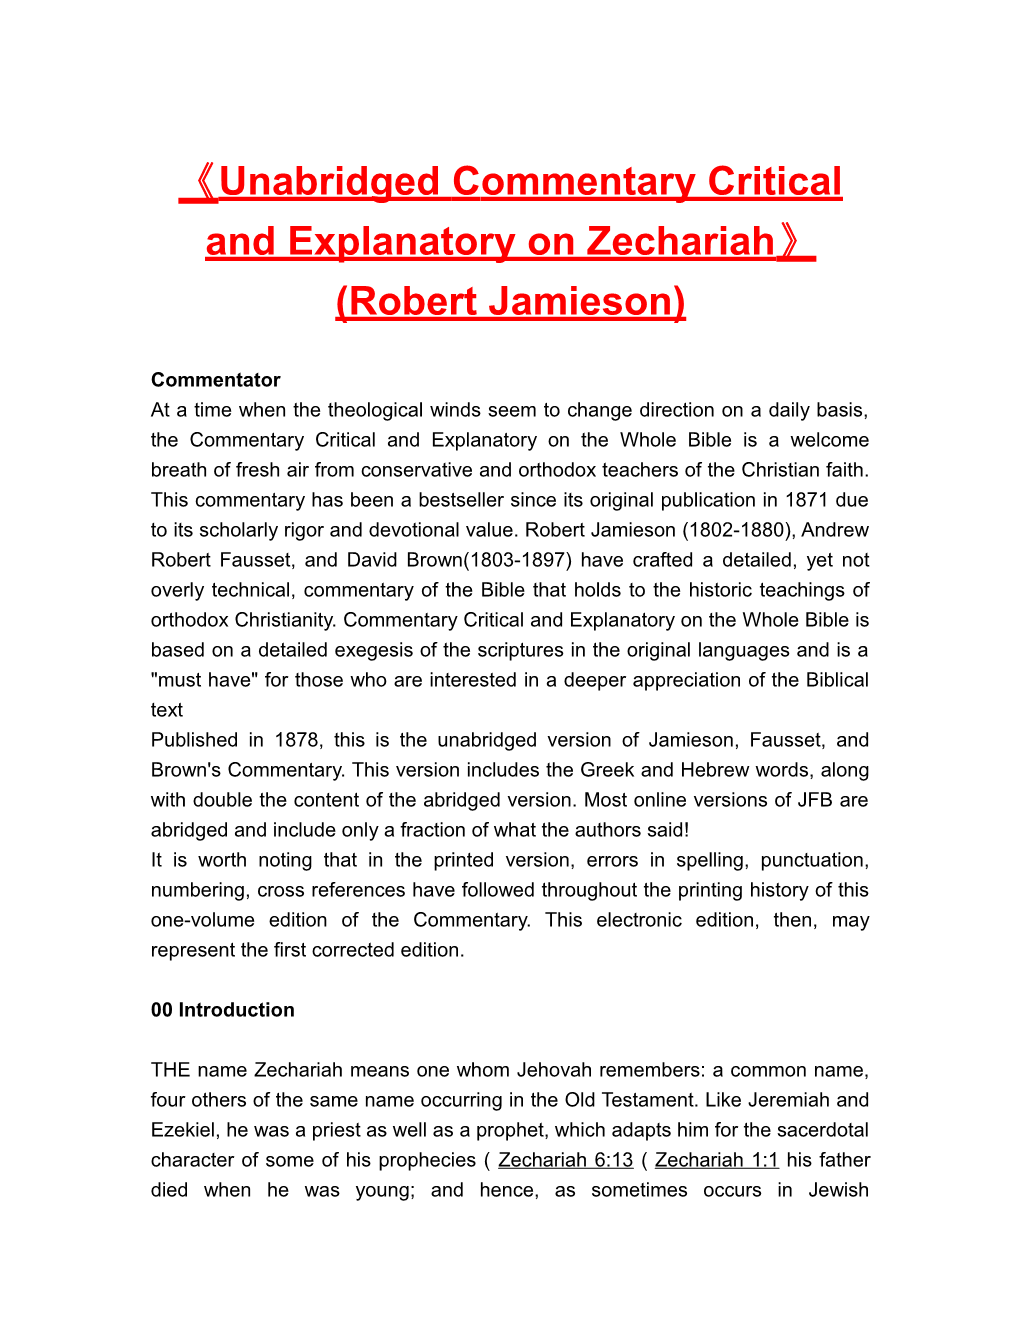 Unabridged Commentarycritical and Explanatory on Zechariah (Robert Jamieson)